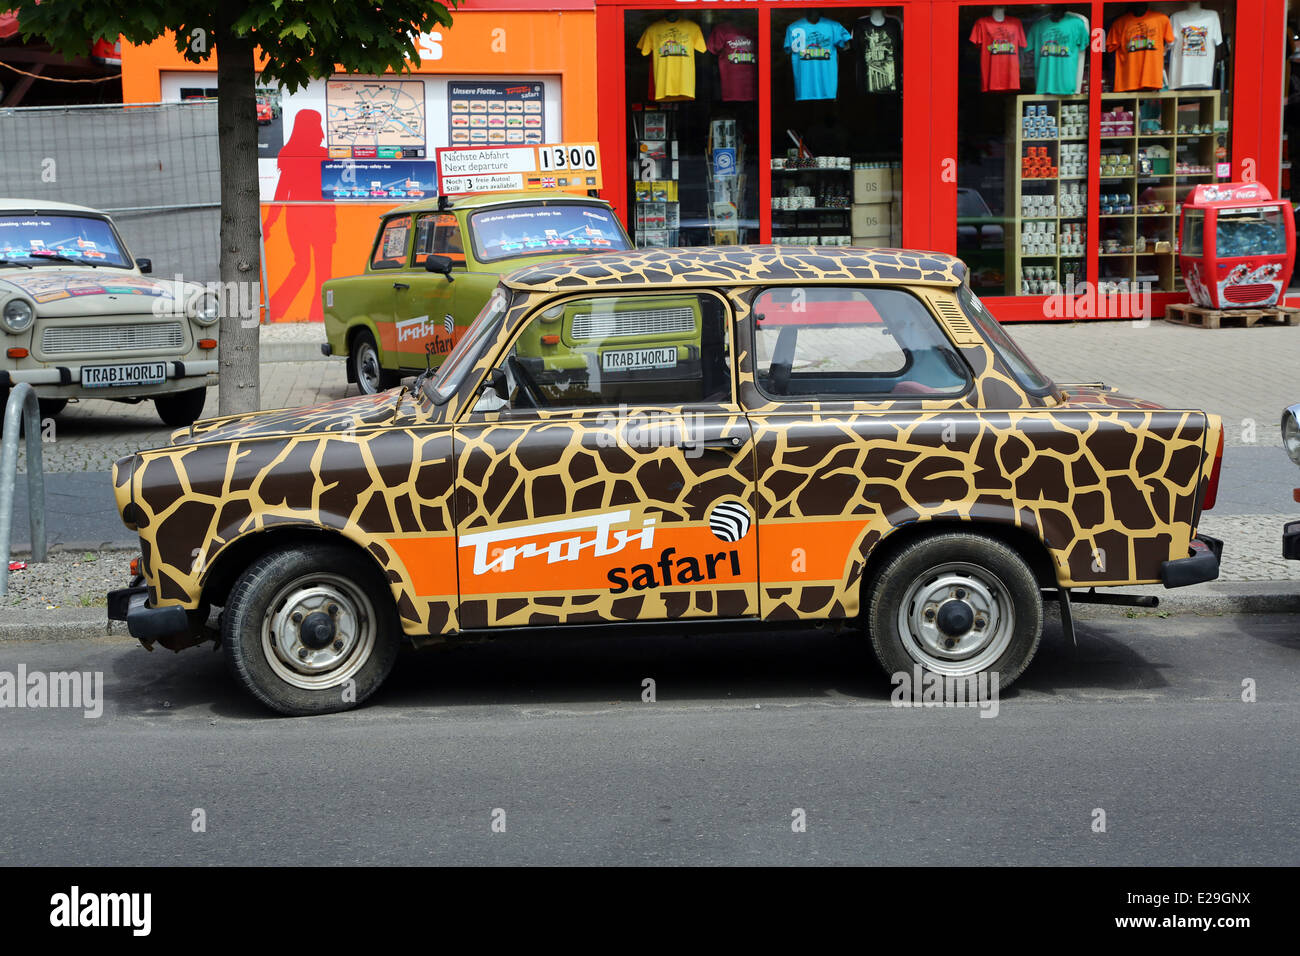 Trabi World Trabant car museum and safari in Berlin, Germany  Stock Photo